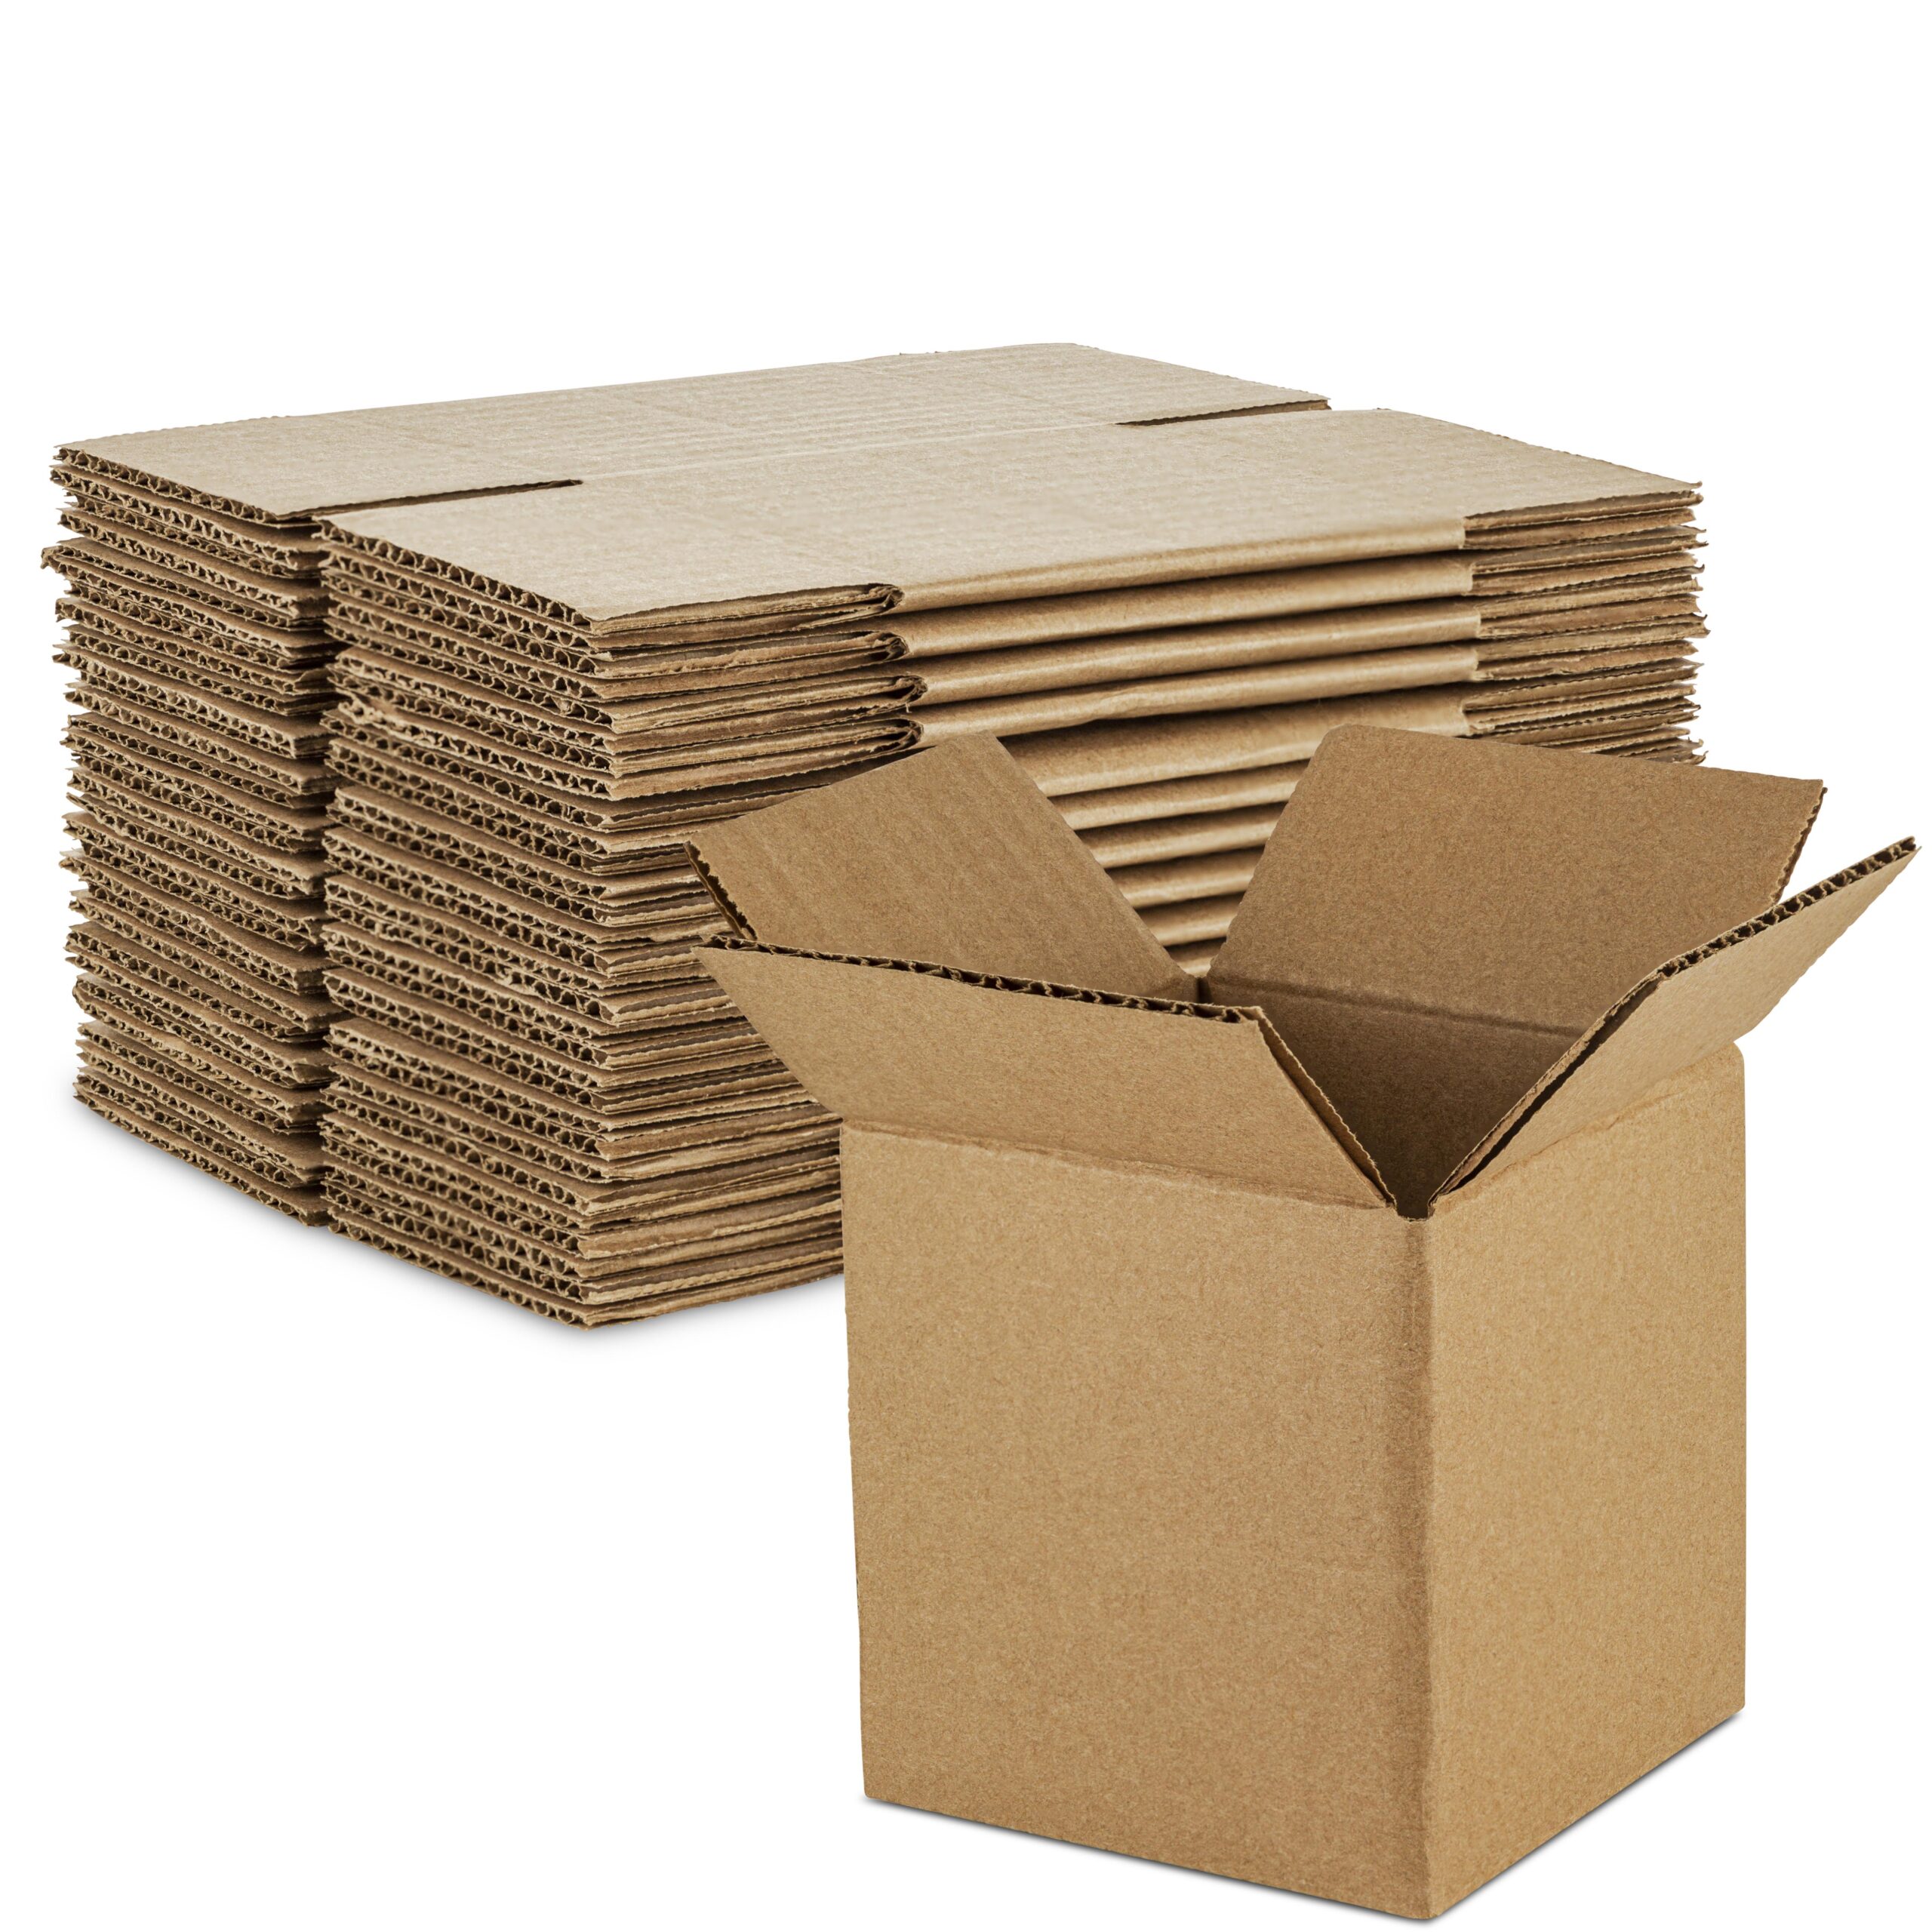 Kraft Card Takeaway Food Boxes - Multiple Sizes  Food box packaging, Food  packaging, Recipe box